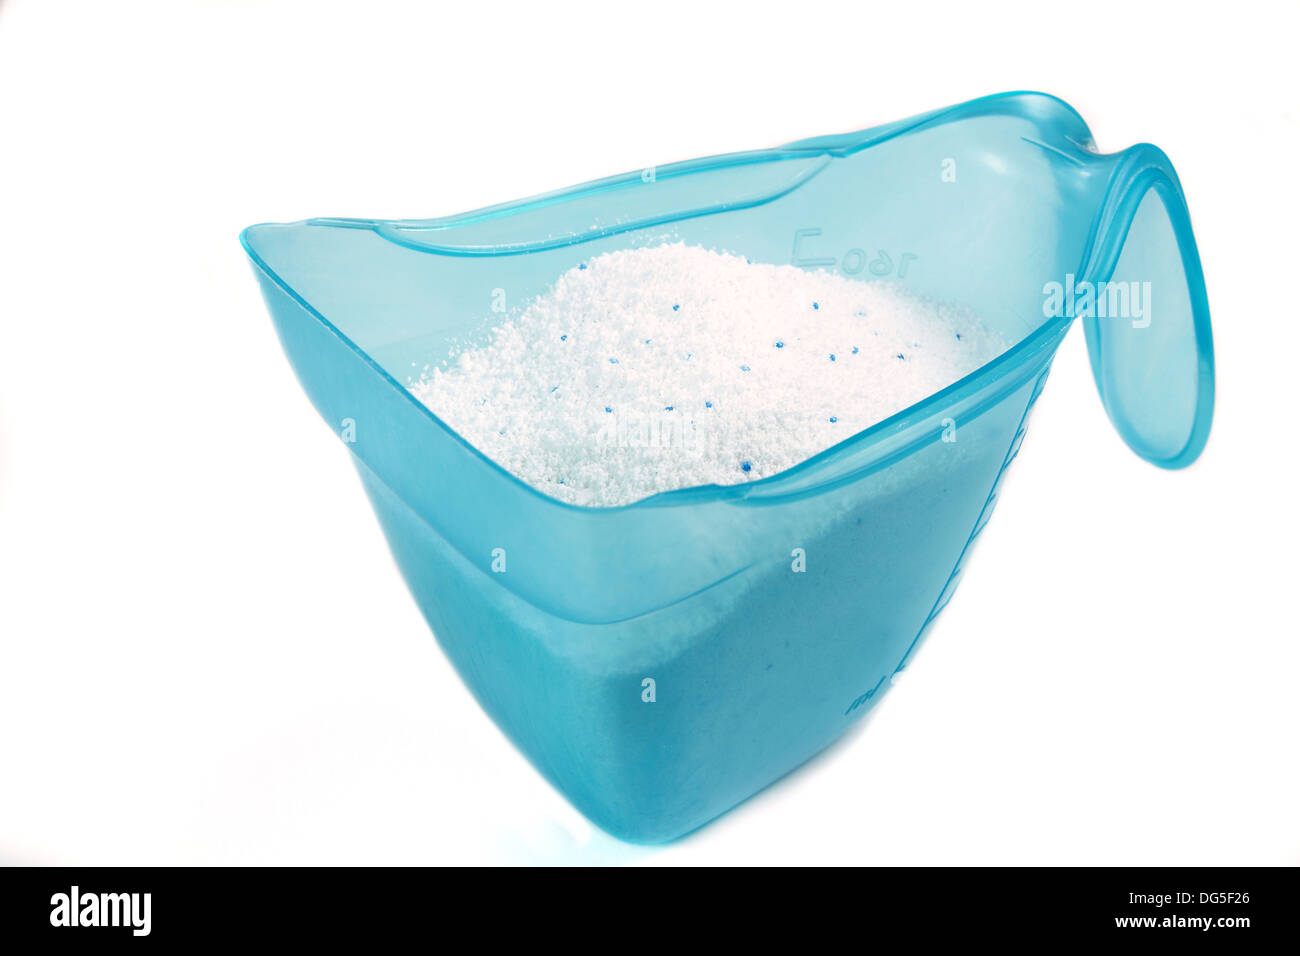 https://c8.alamy.com/comp/DG5F26/laundry-detergent-or-washing-powder-in-a-blue-measuring-cup-studio-DG5F26.jpg